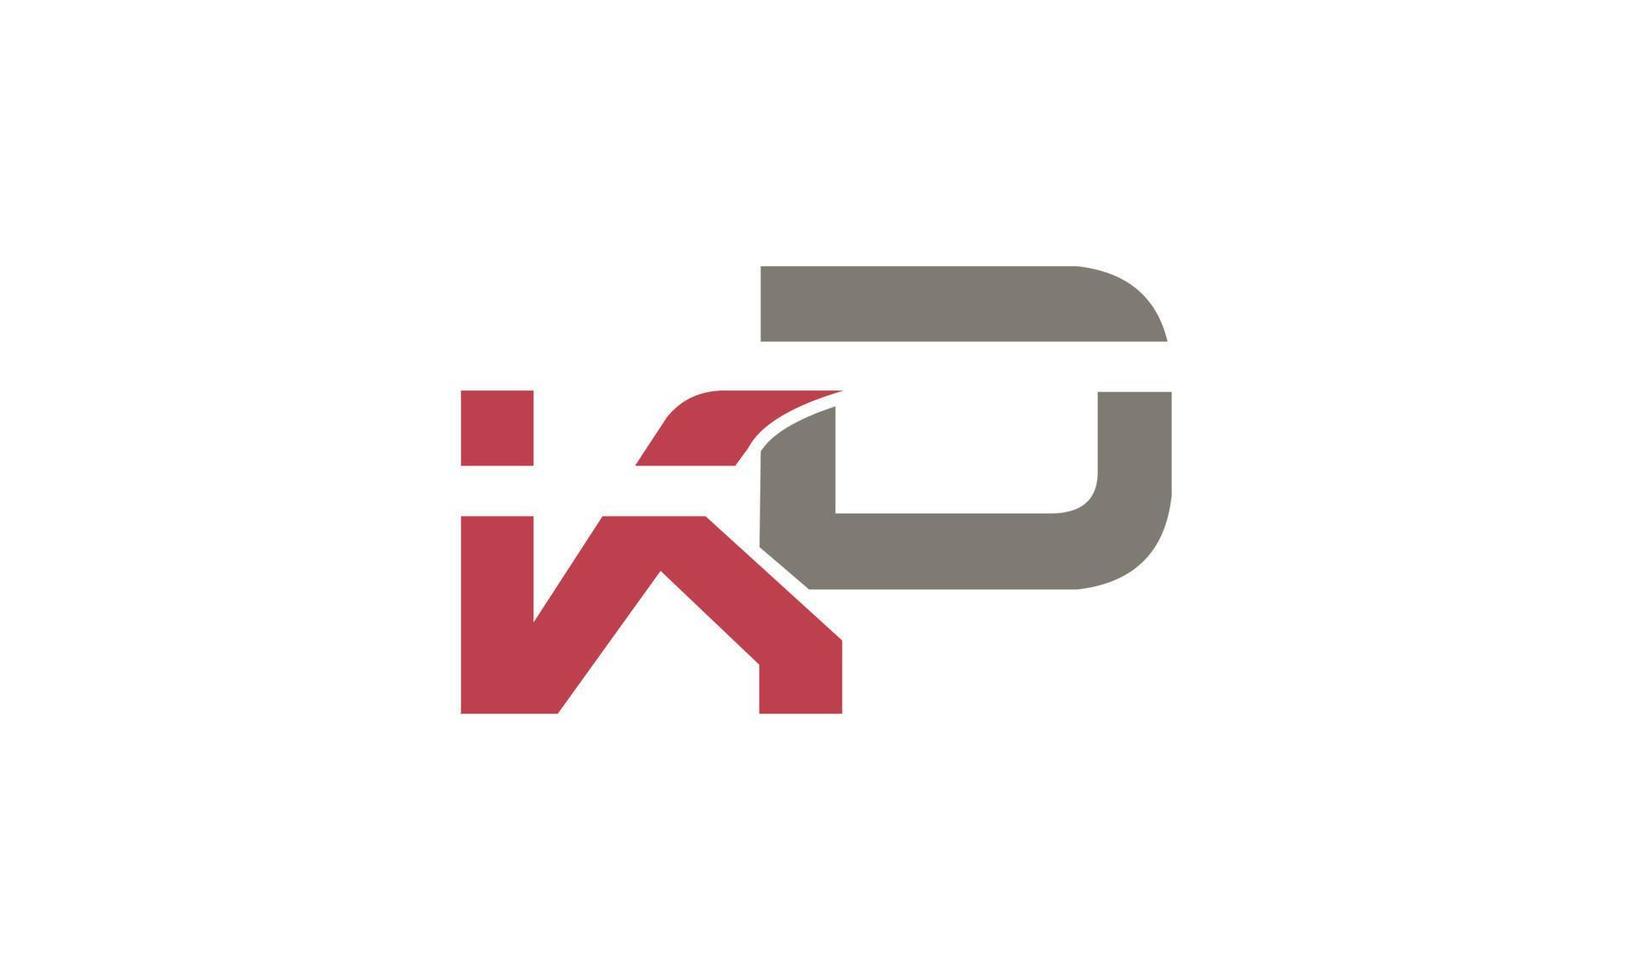 Alphabet letters Initials Monogram logo KD, DK, K and D vector